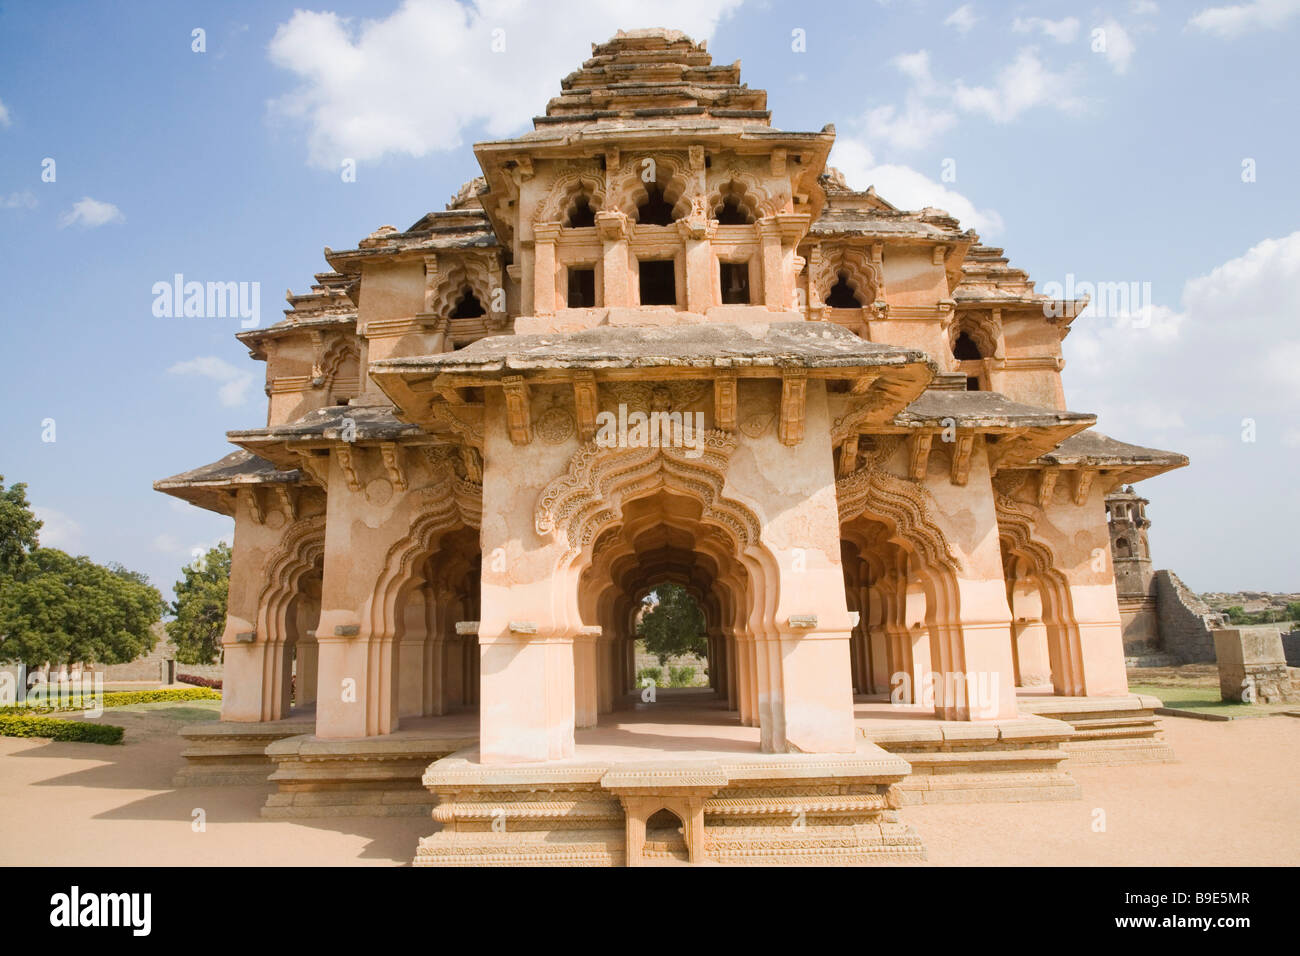 Facade of a temple, Lotus Temple, Hampi, Karnataka, India Stock Photo